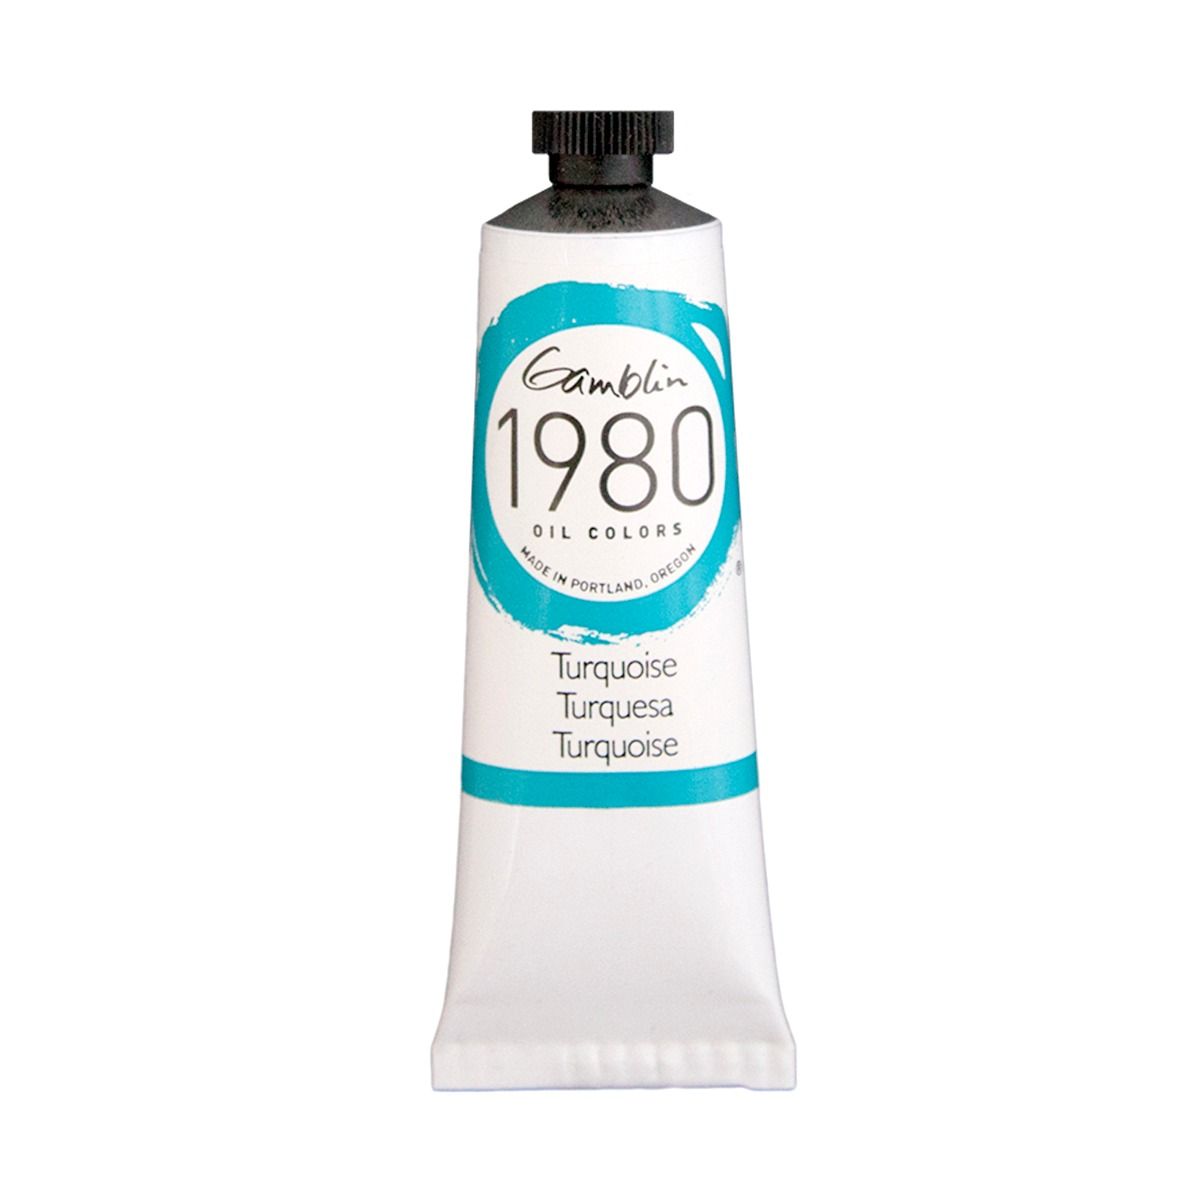 Gamblin 1980 Oils - Turquoise, 37 ml (1.25oz)